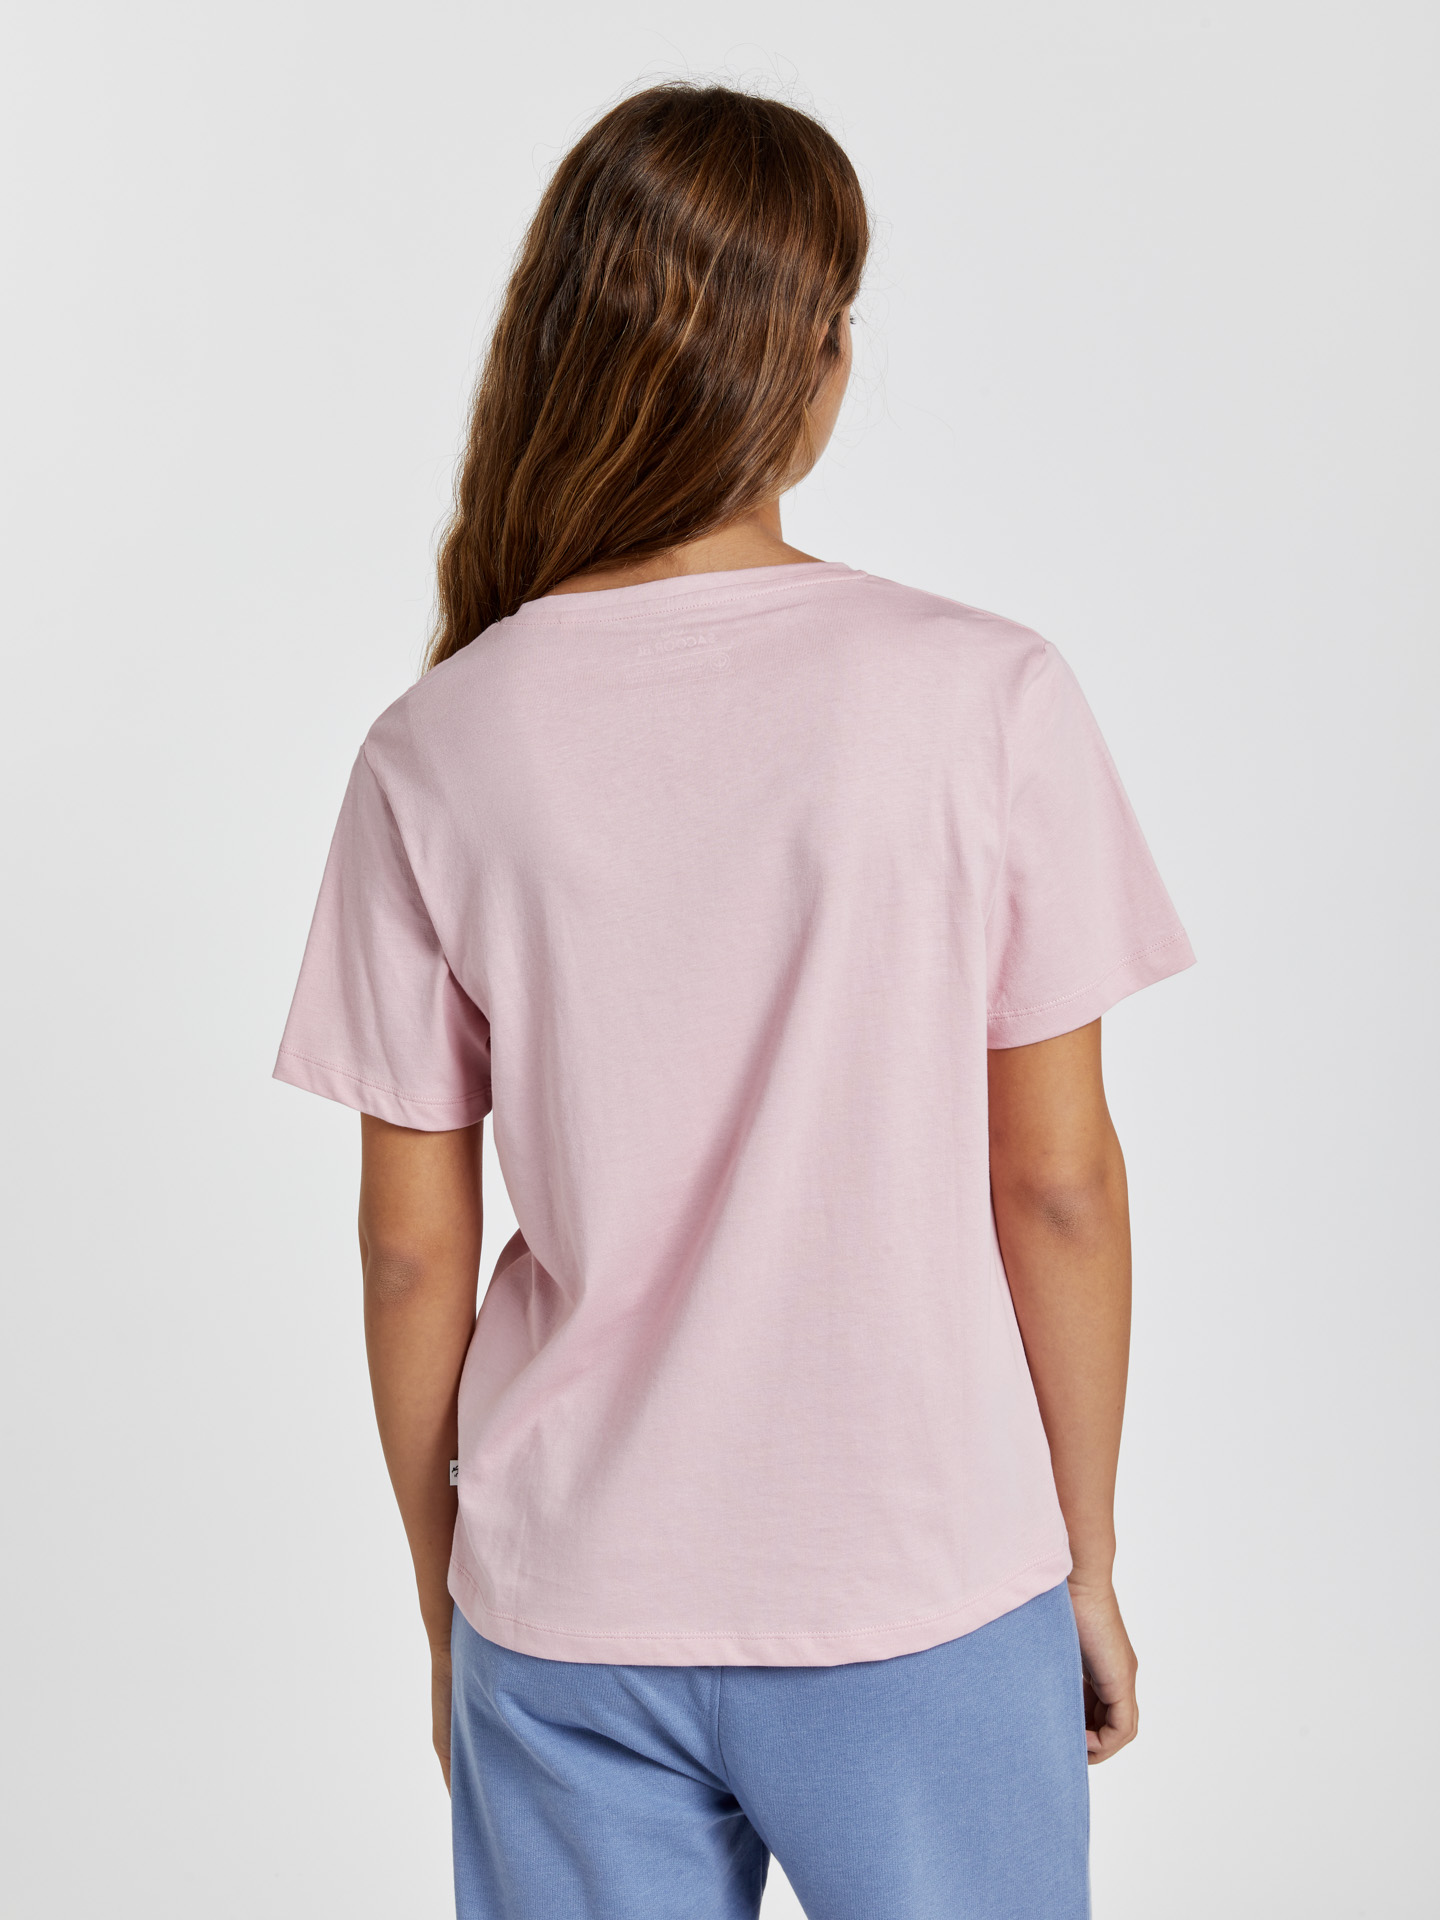 T-Shirt Rosa Claro Casual Mulher